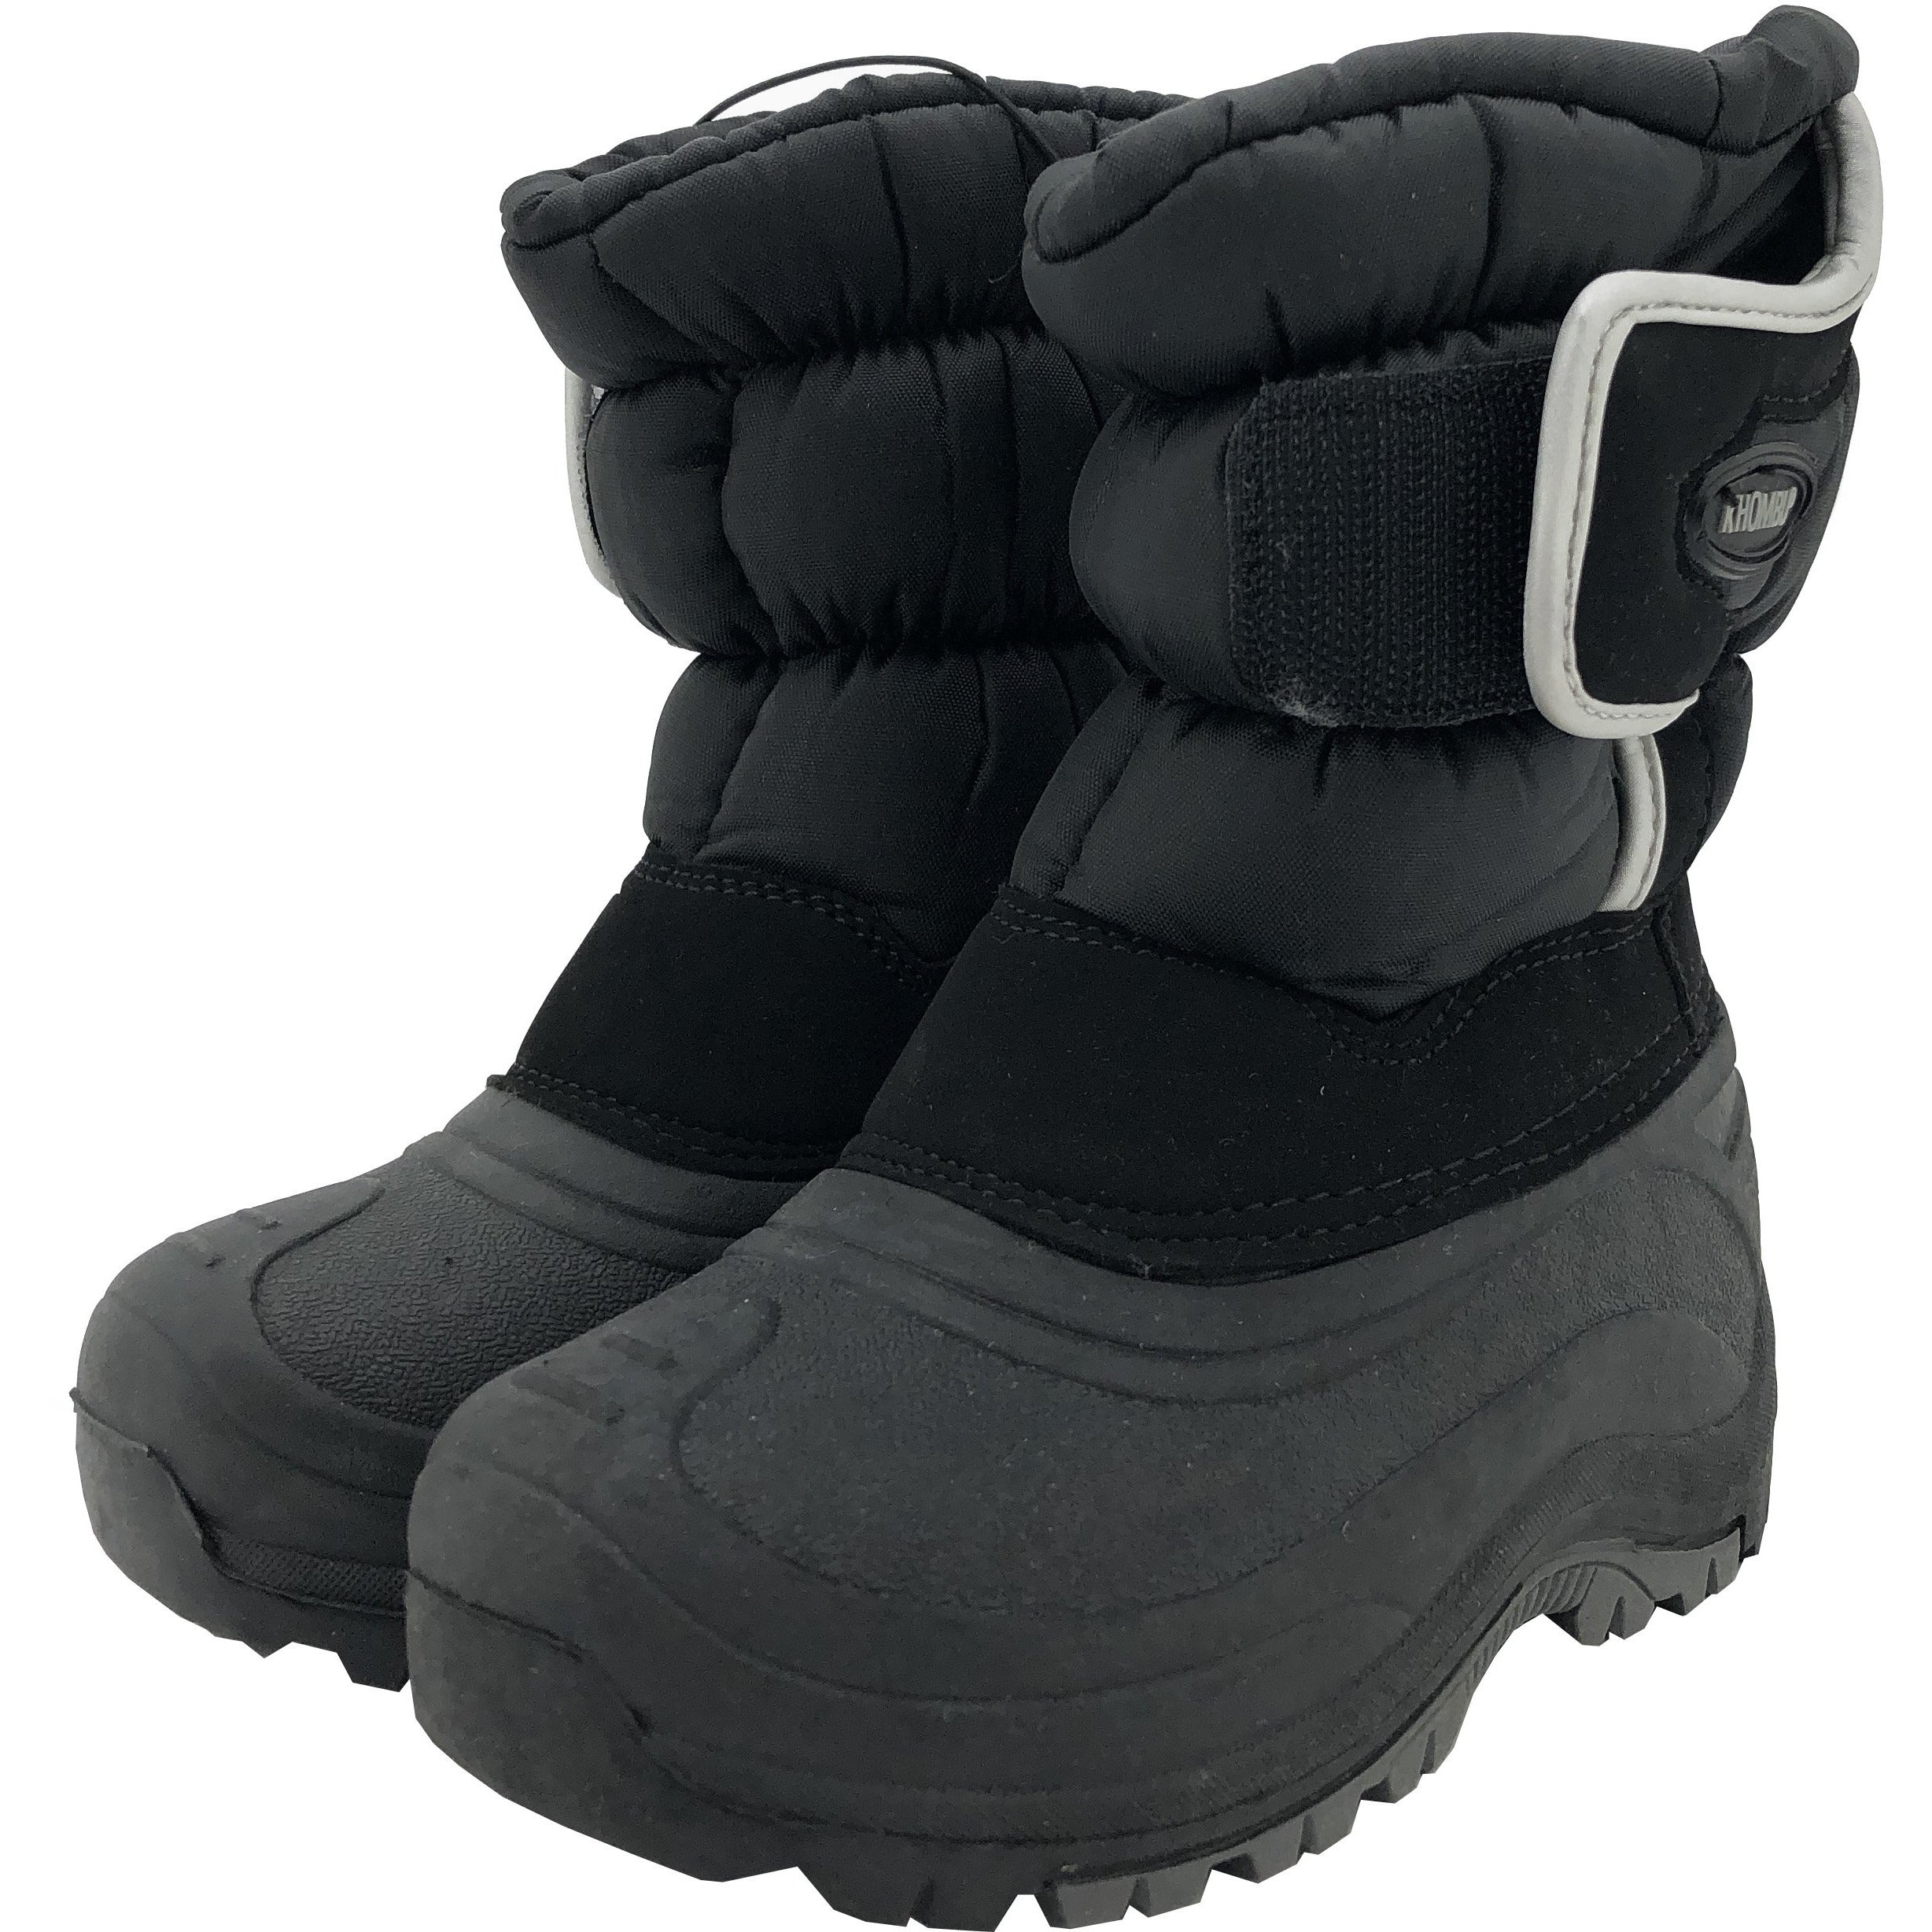 Boys winter Boots size 10 Black